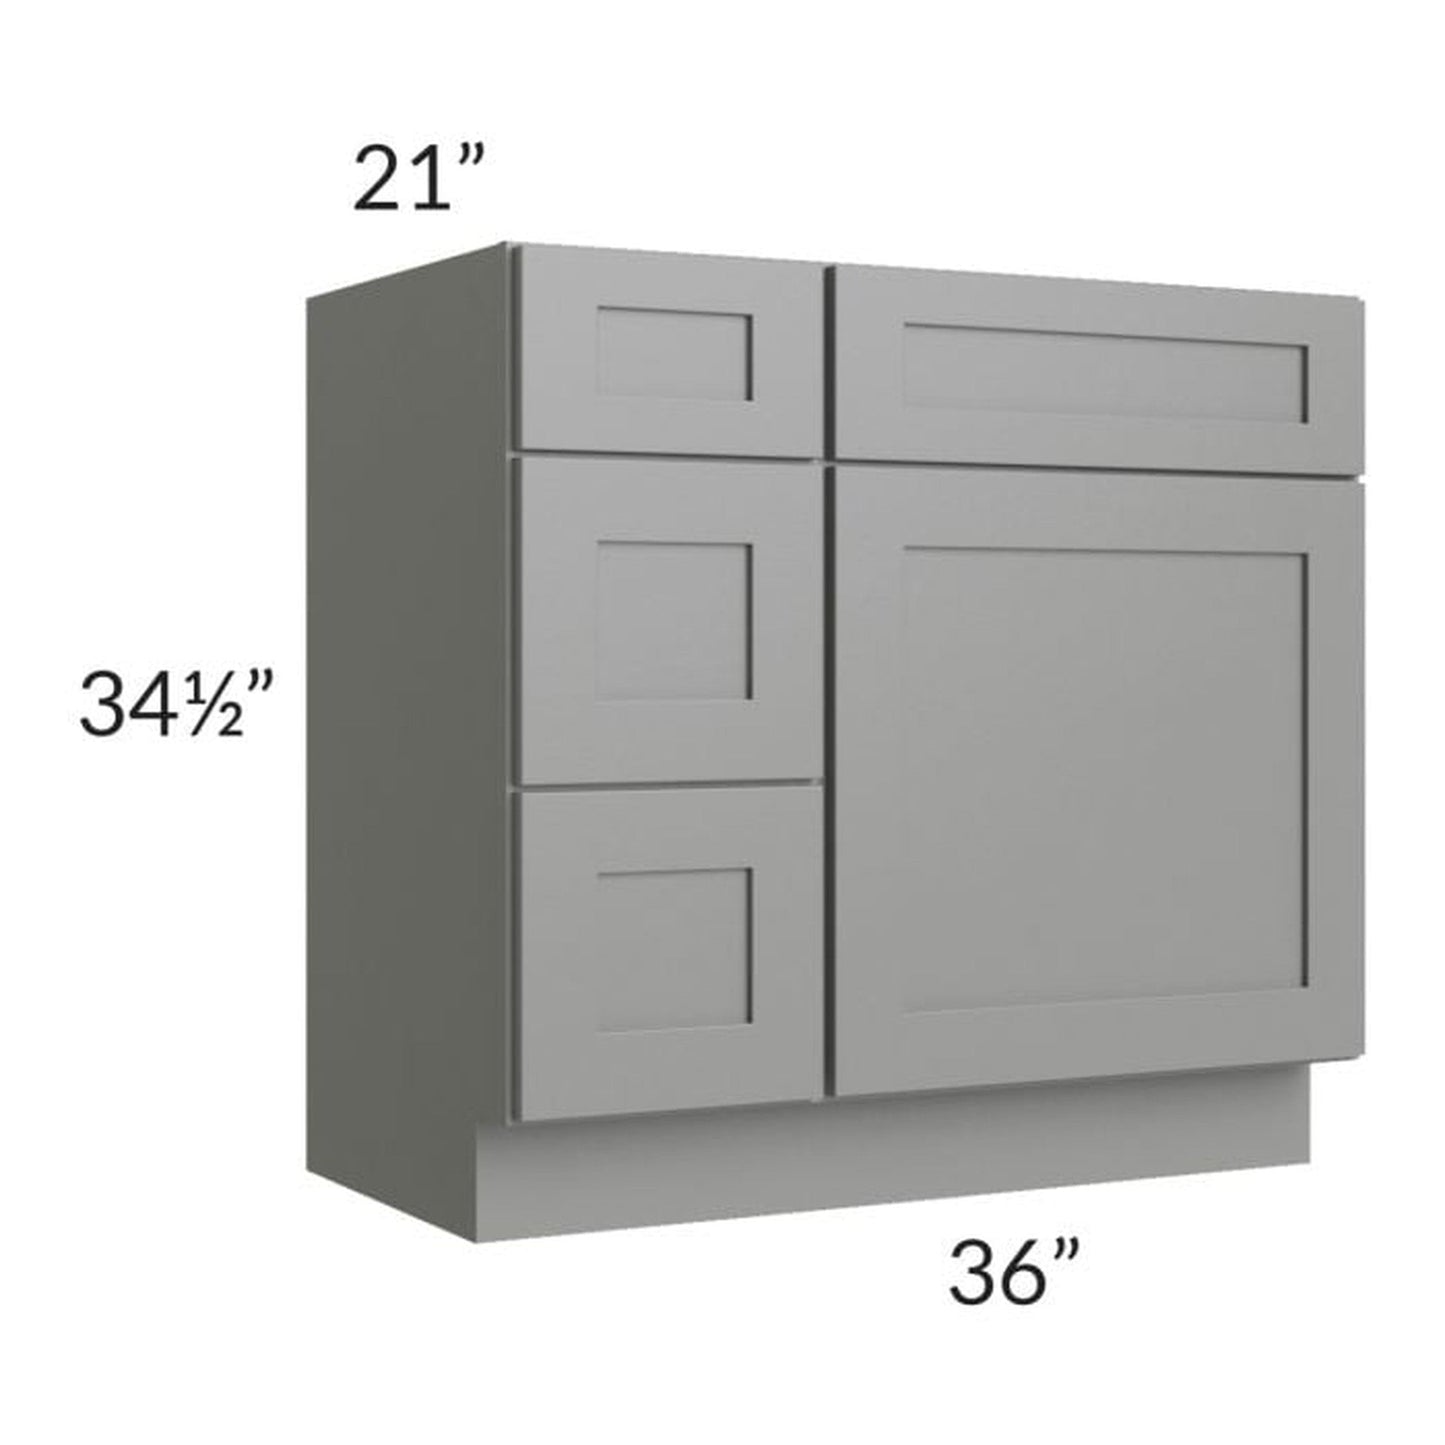 RTA Shale Grey Shaker 36" Vanity Sink Base Cabinet (Drawers on Left) with 2 Decorative End Panels